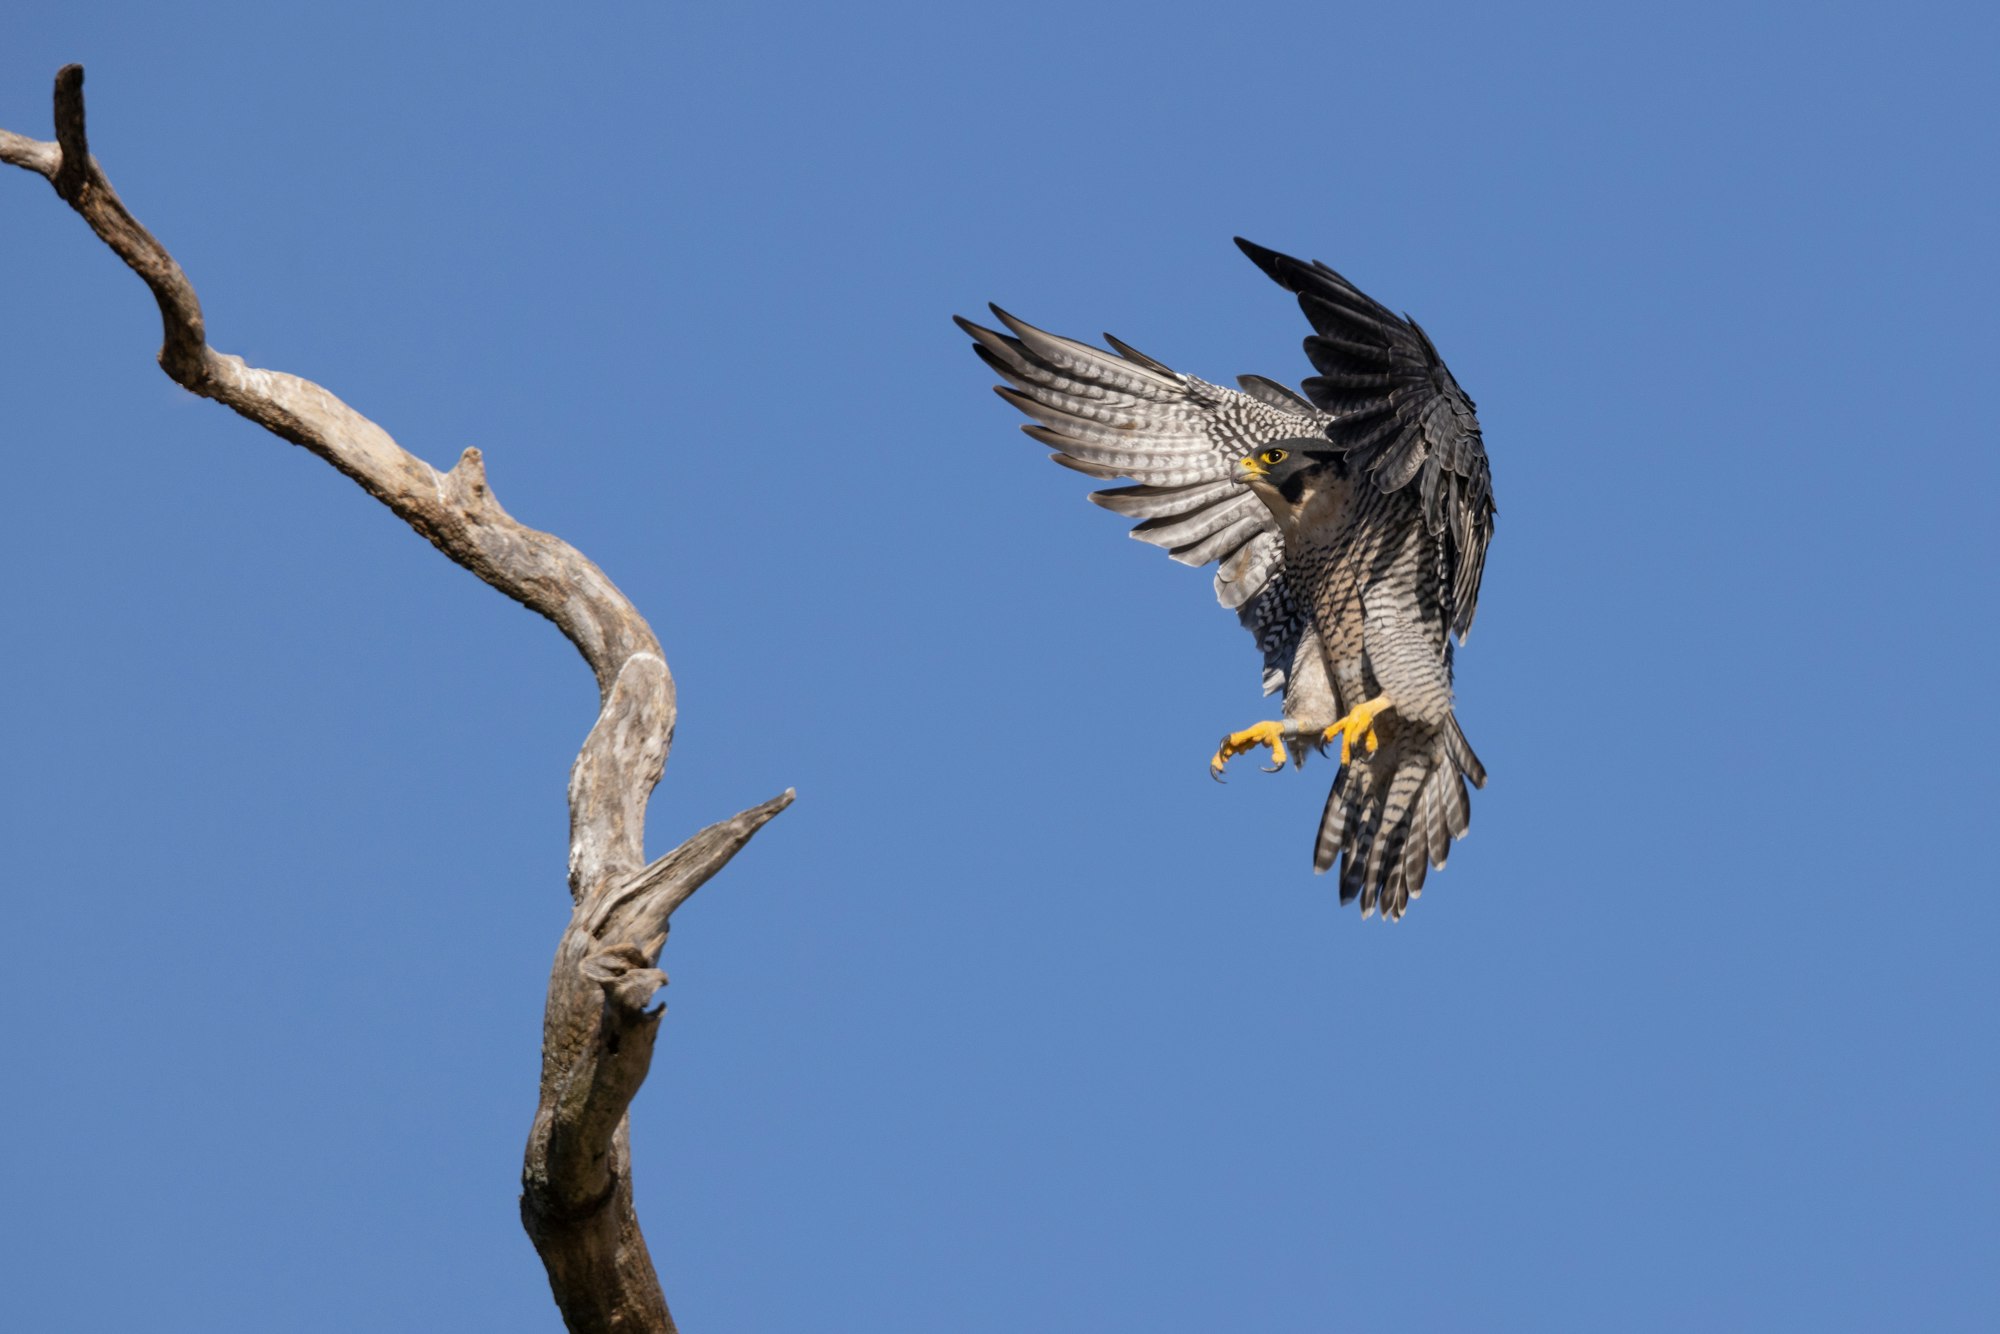 Peregrine Falcon landing on a branch